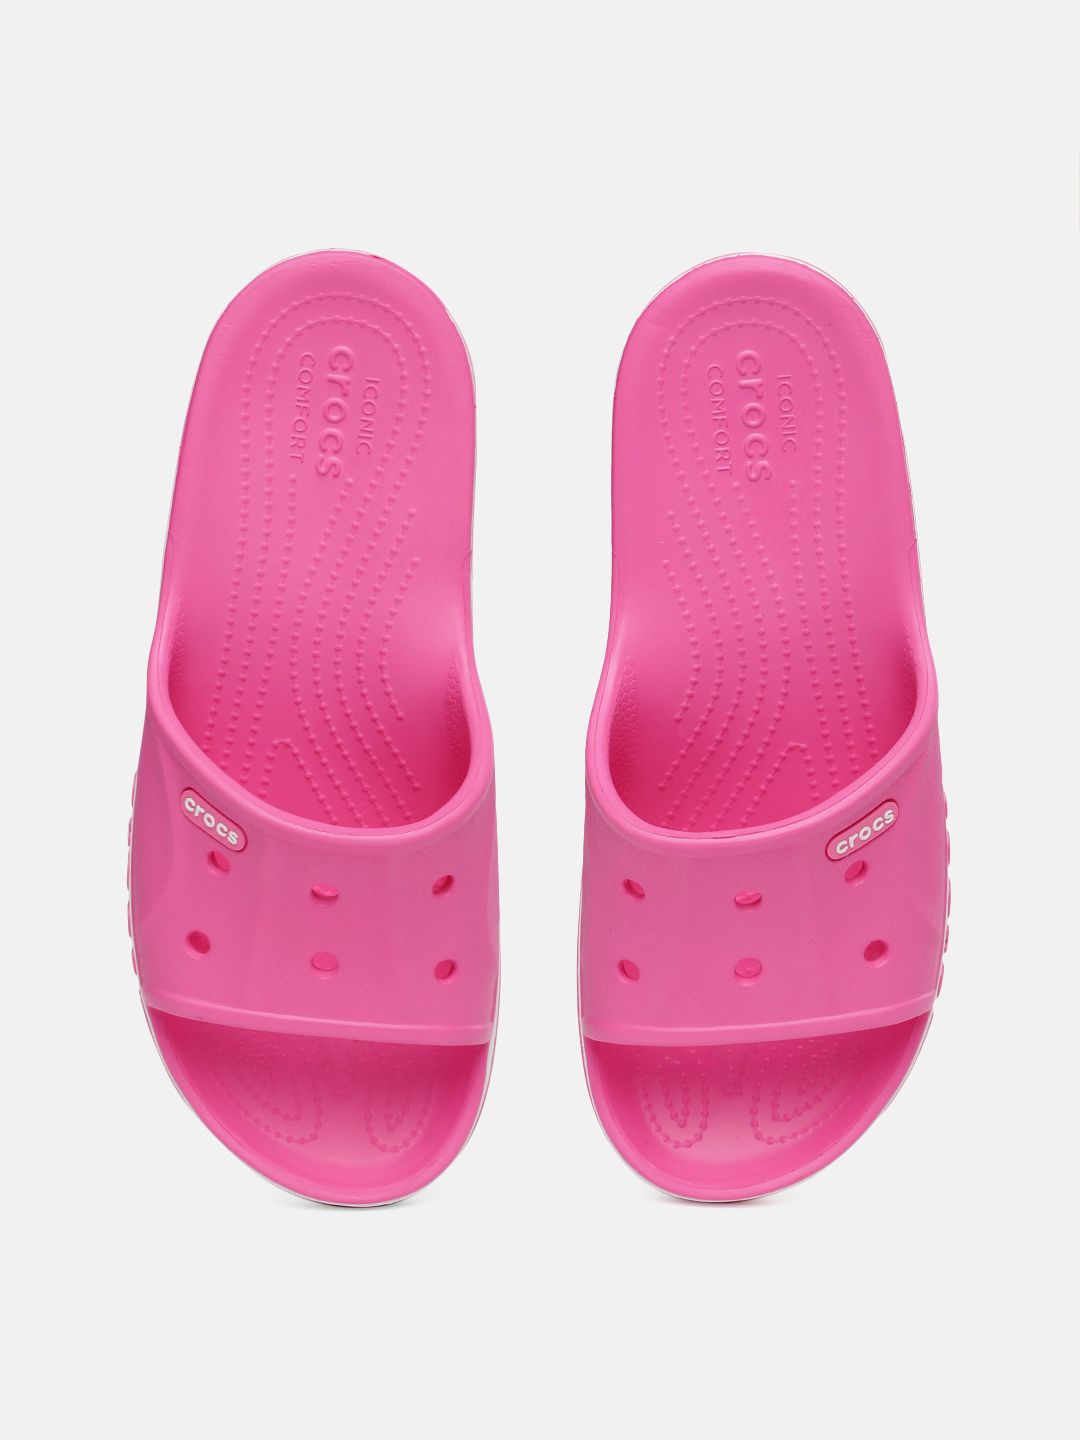 Crocs Unisex Pink Solid Sliders Price in India